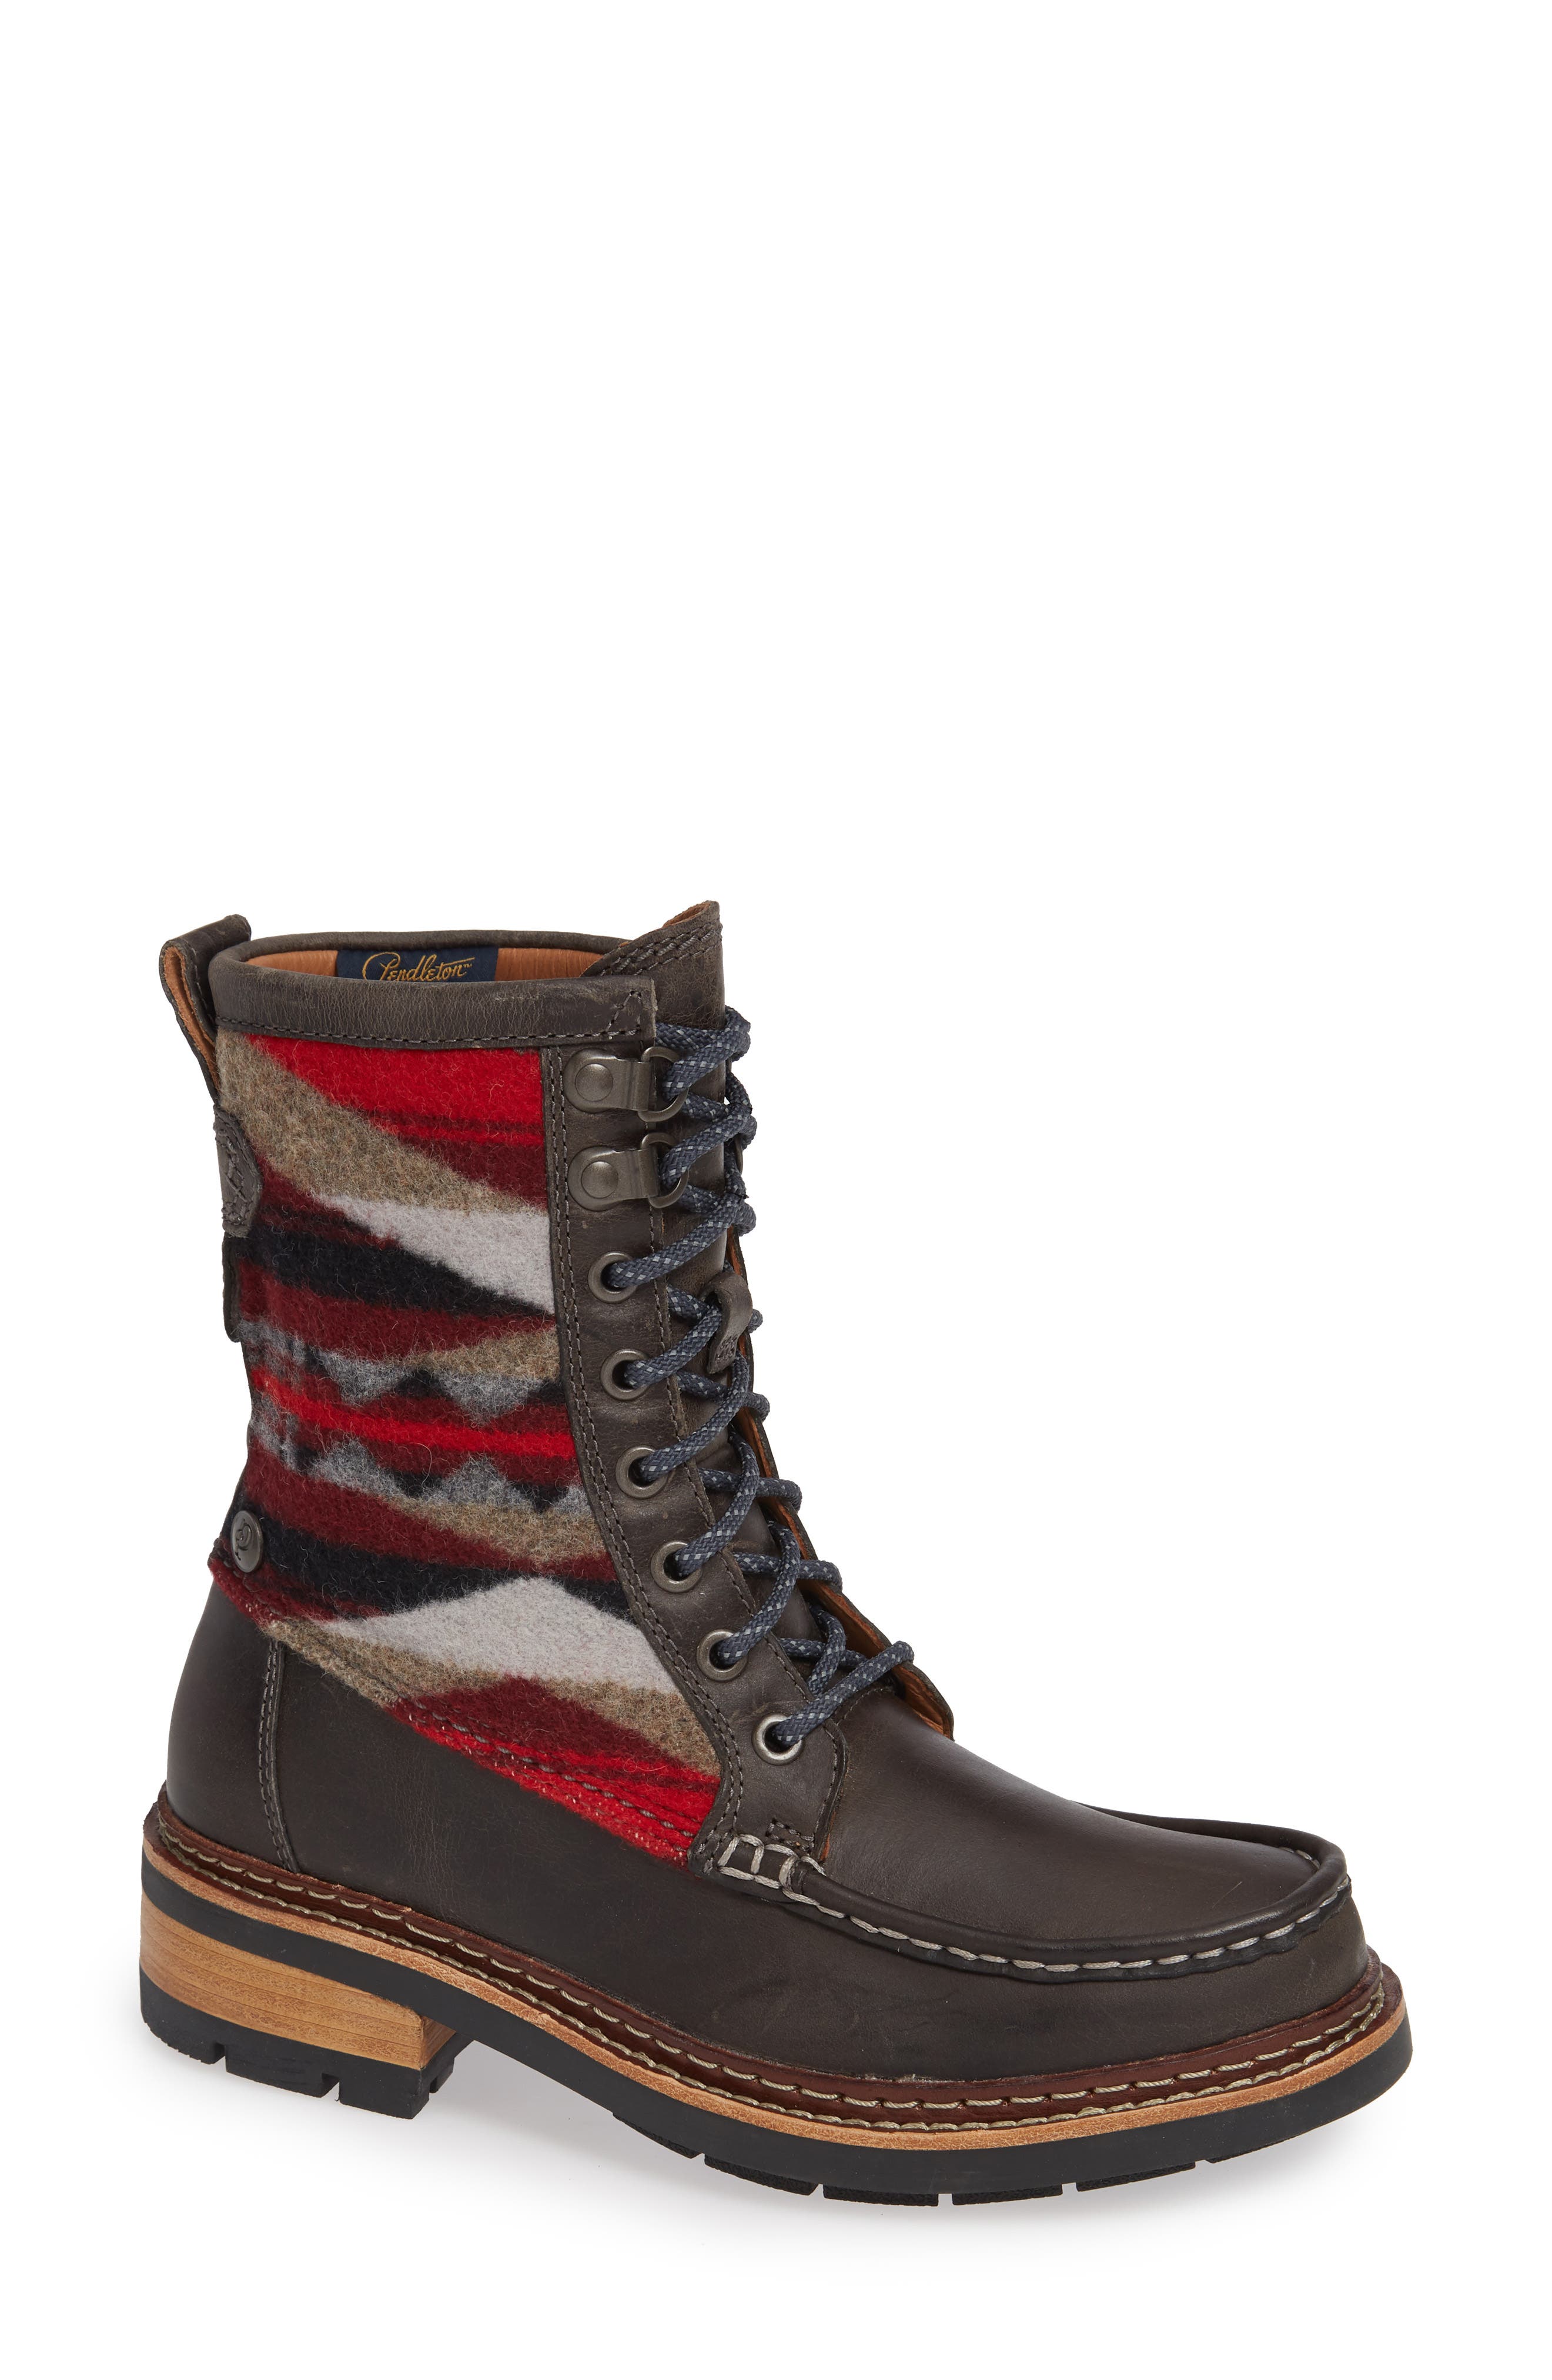 pendleton clarks boots